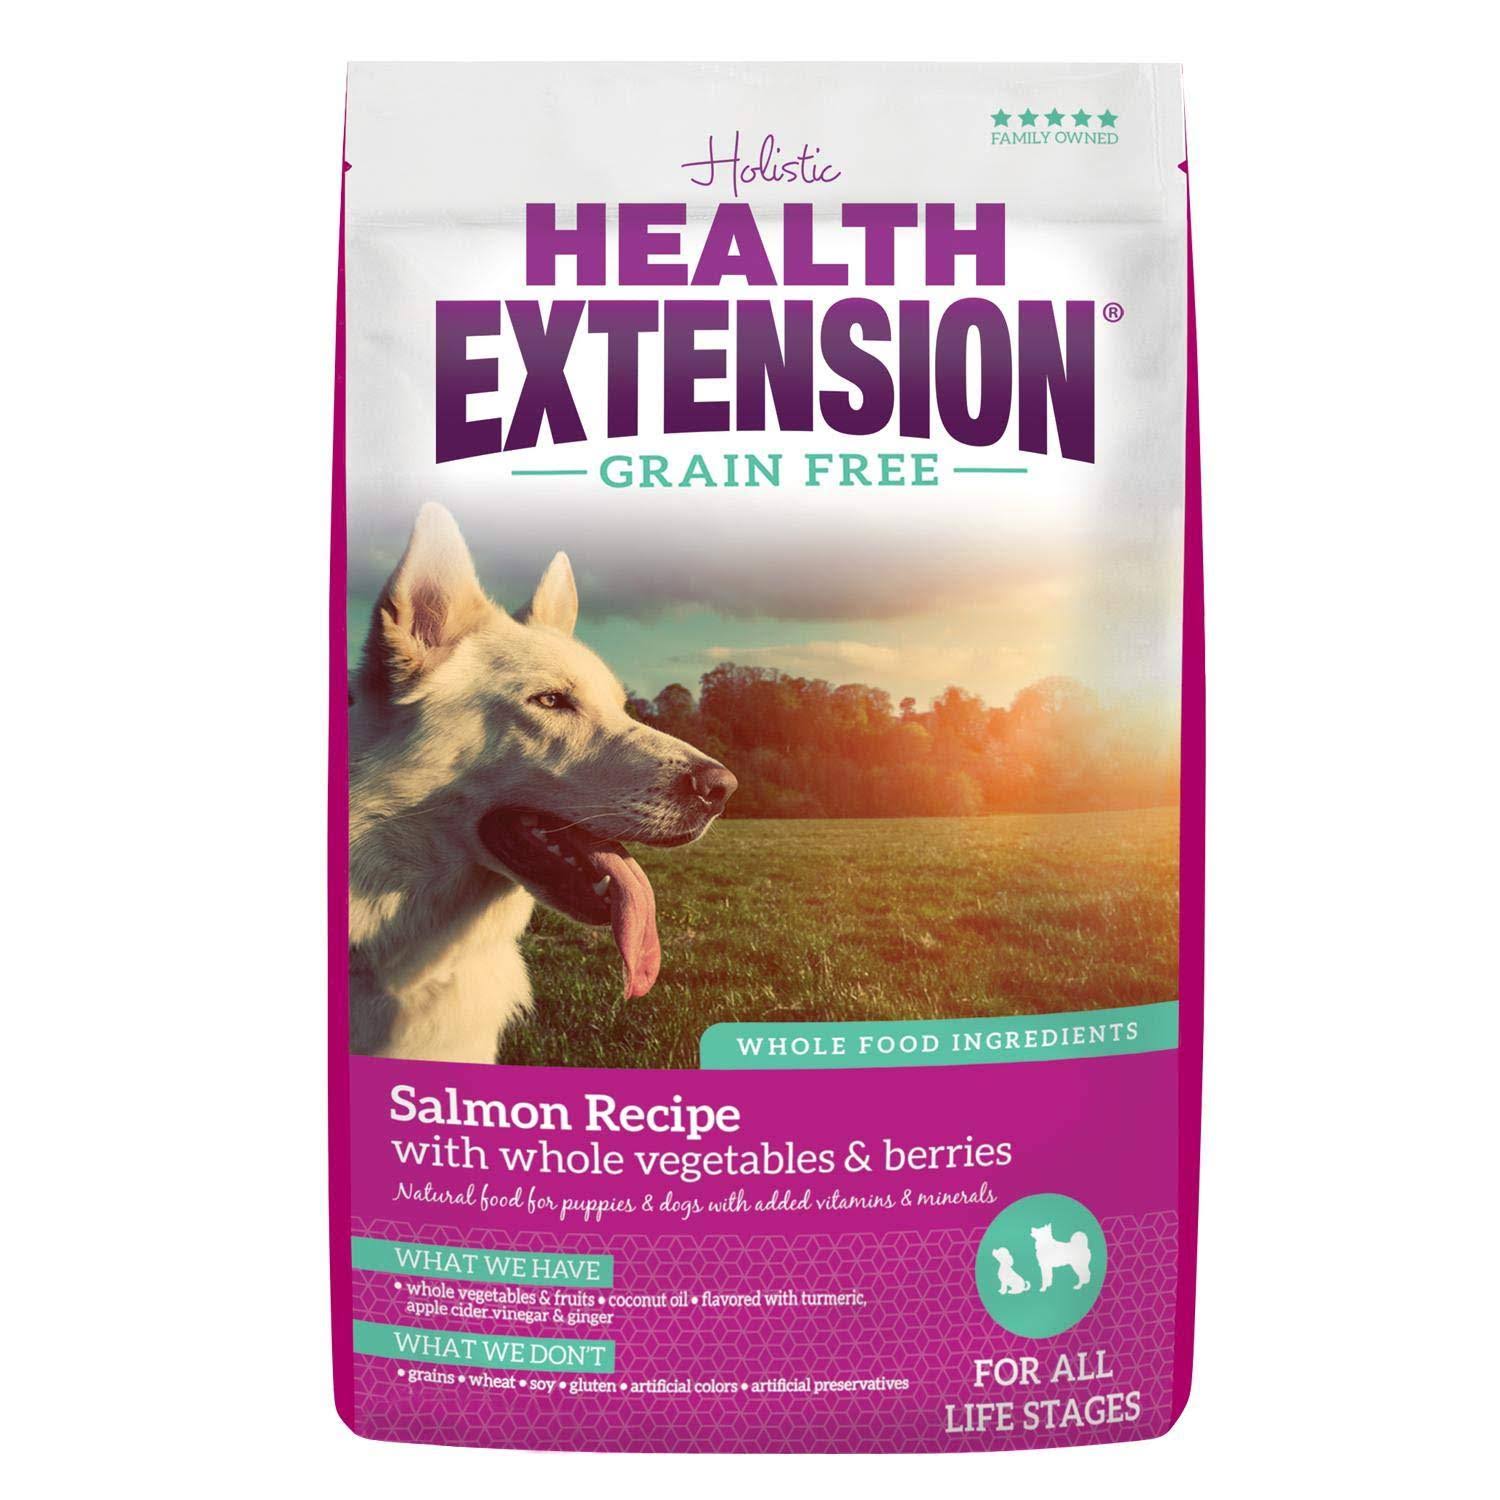 Health Extension Grain Free Dry Dog Food - Salmon Recipe, 4lb